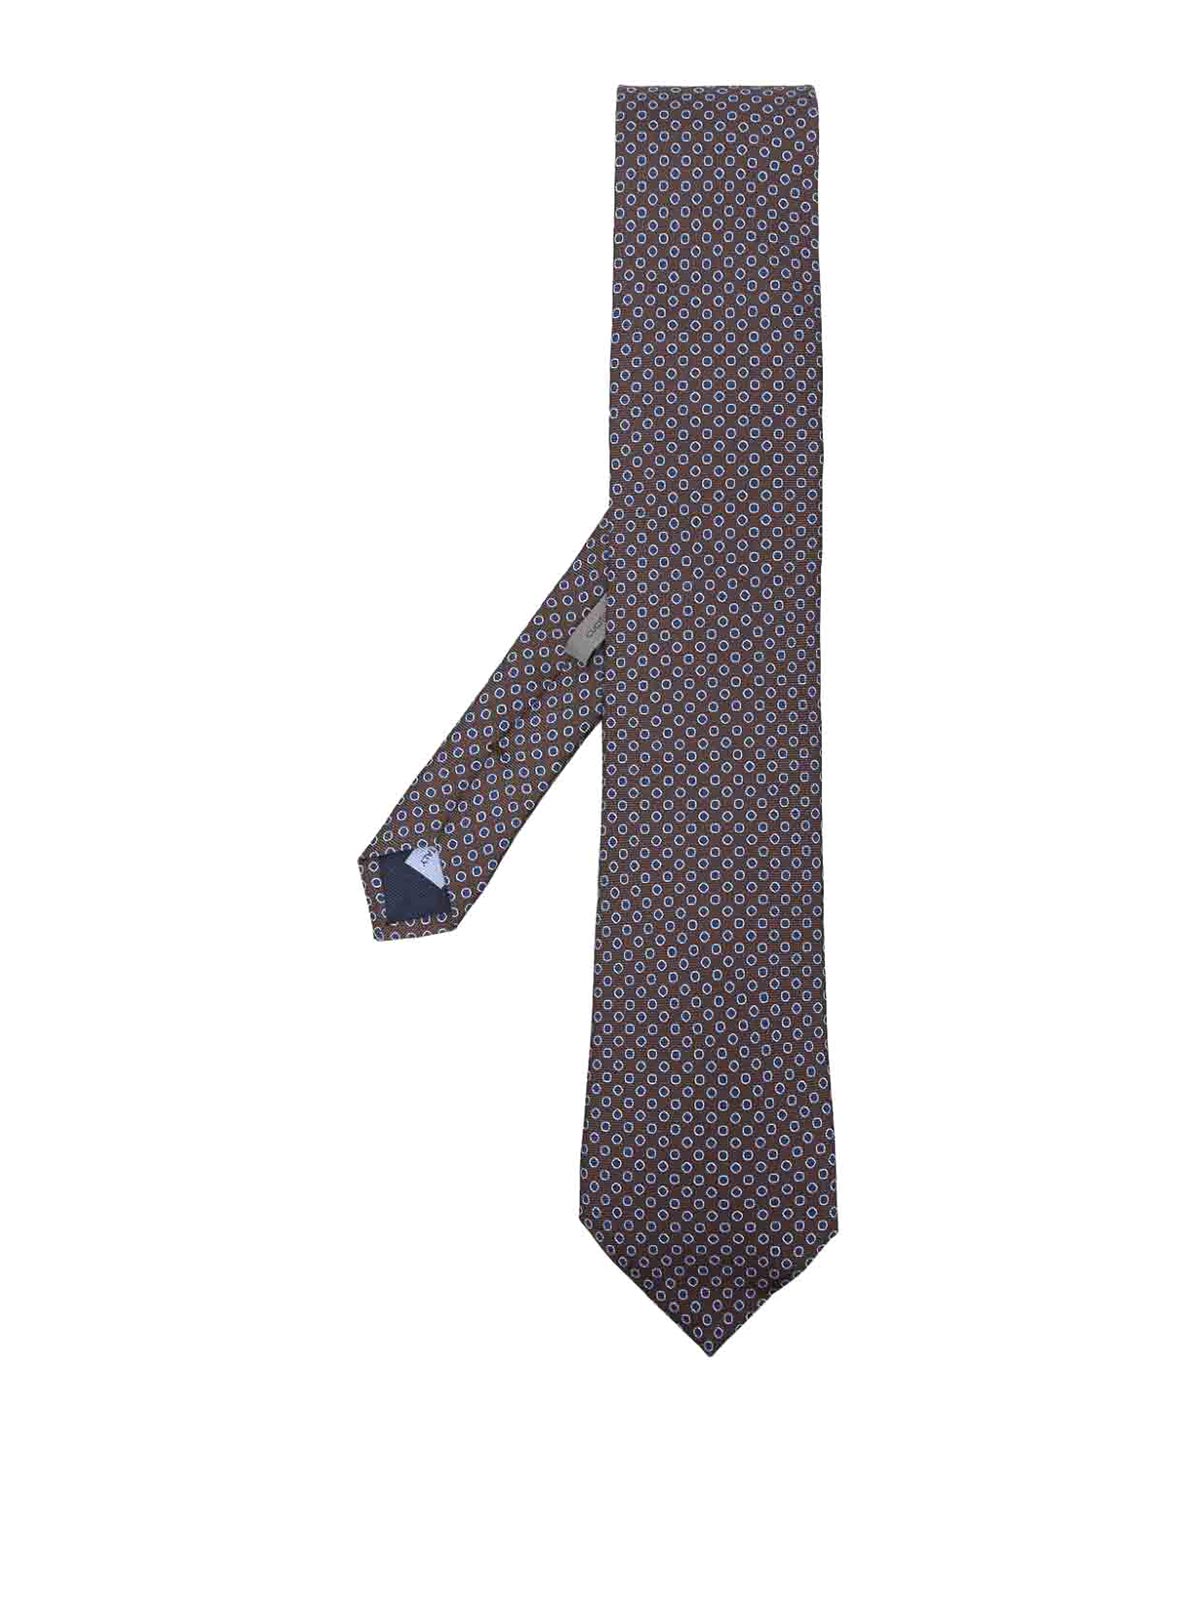 Corneliani Brown Dot-pattern Silk Tie.